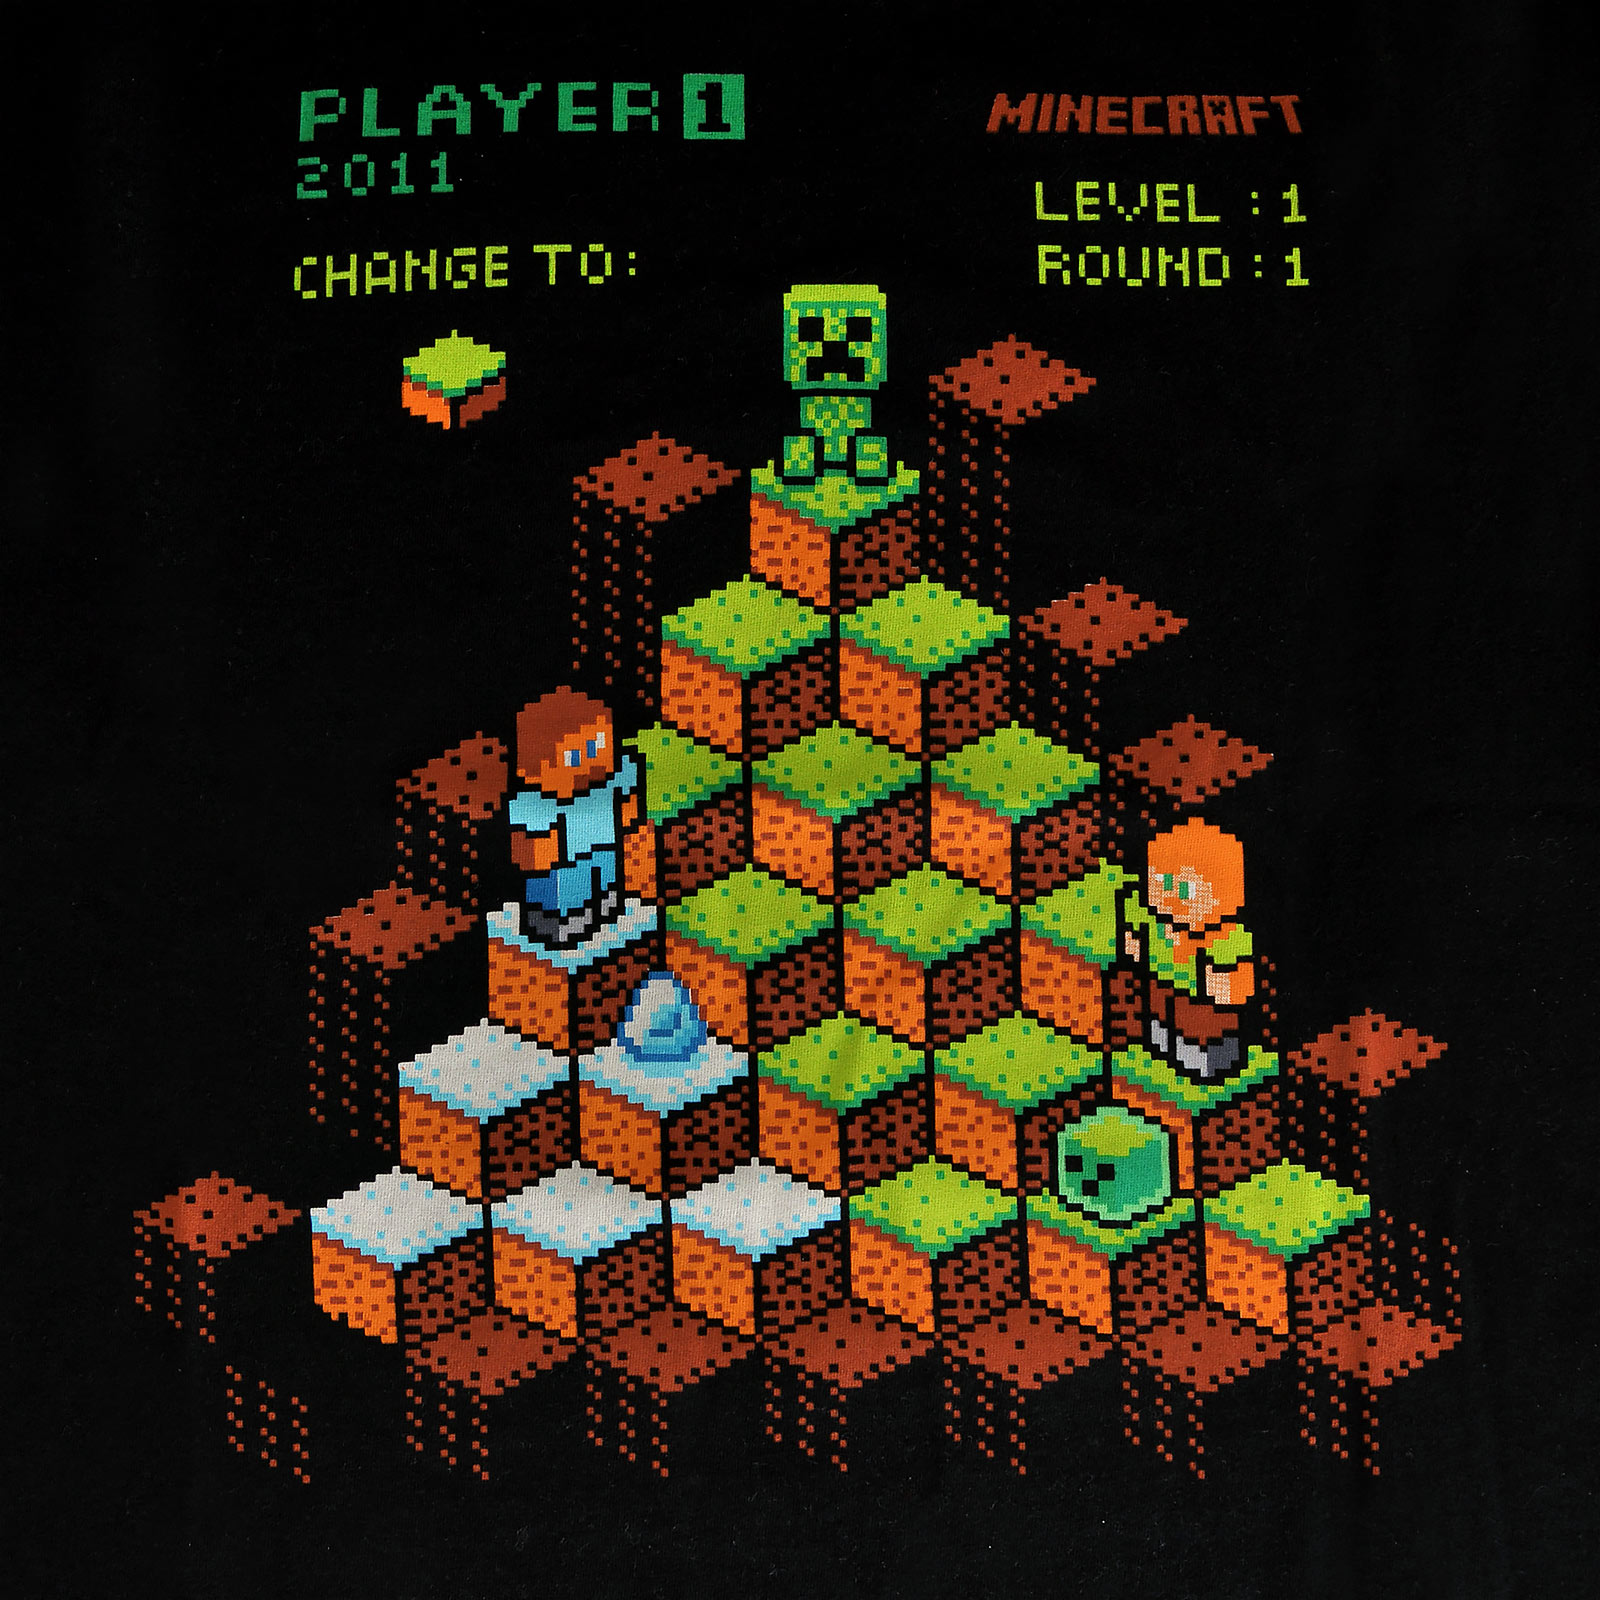 Minecraft - Miner Mountain Retro T-shirt Enfants noir